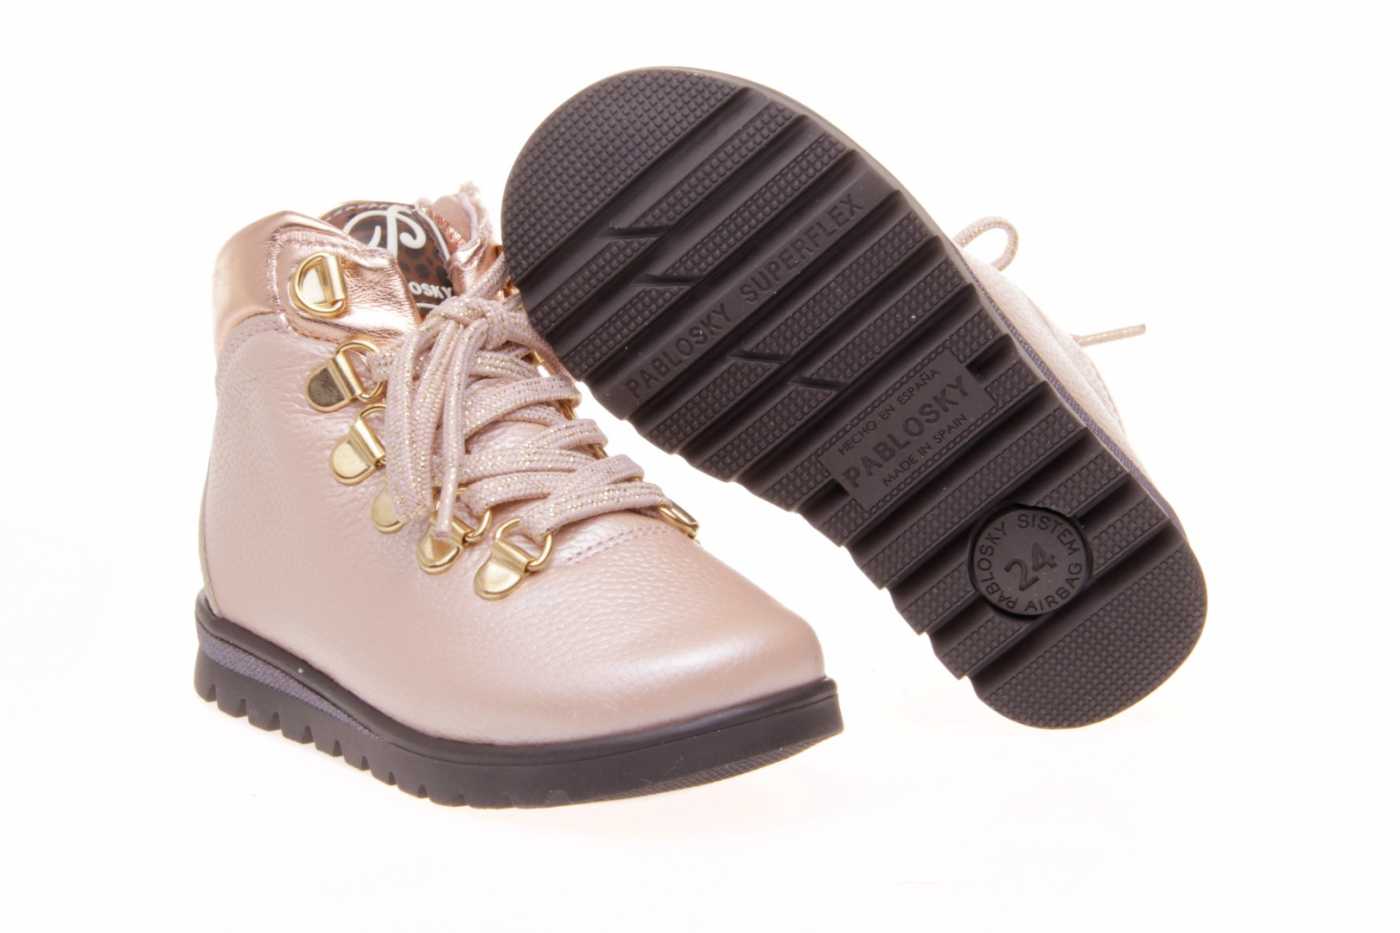 Comprar zapato PABLOSKY para NIÑA estilo BOTAS color EMPOLVADO CHAROL